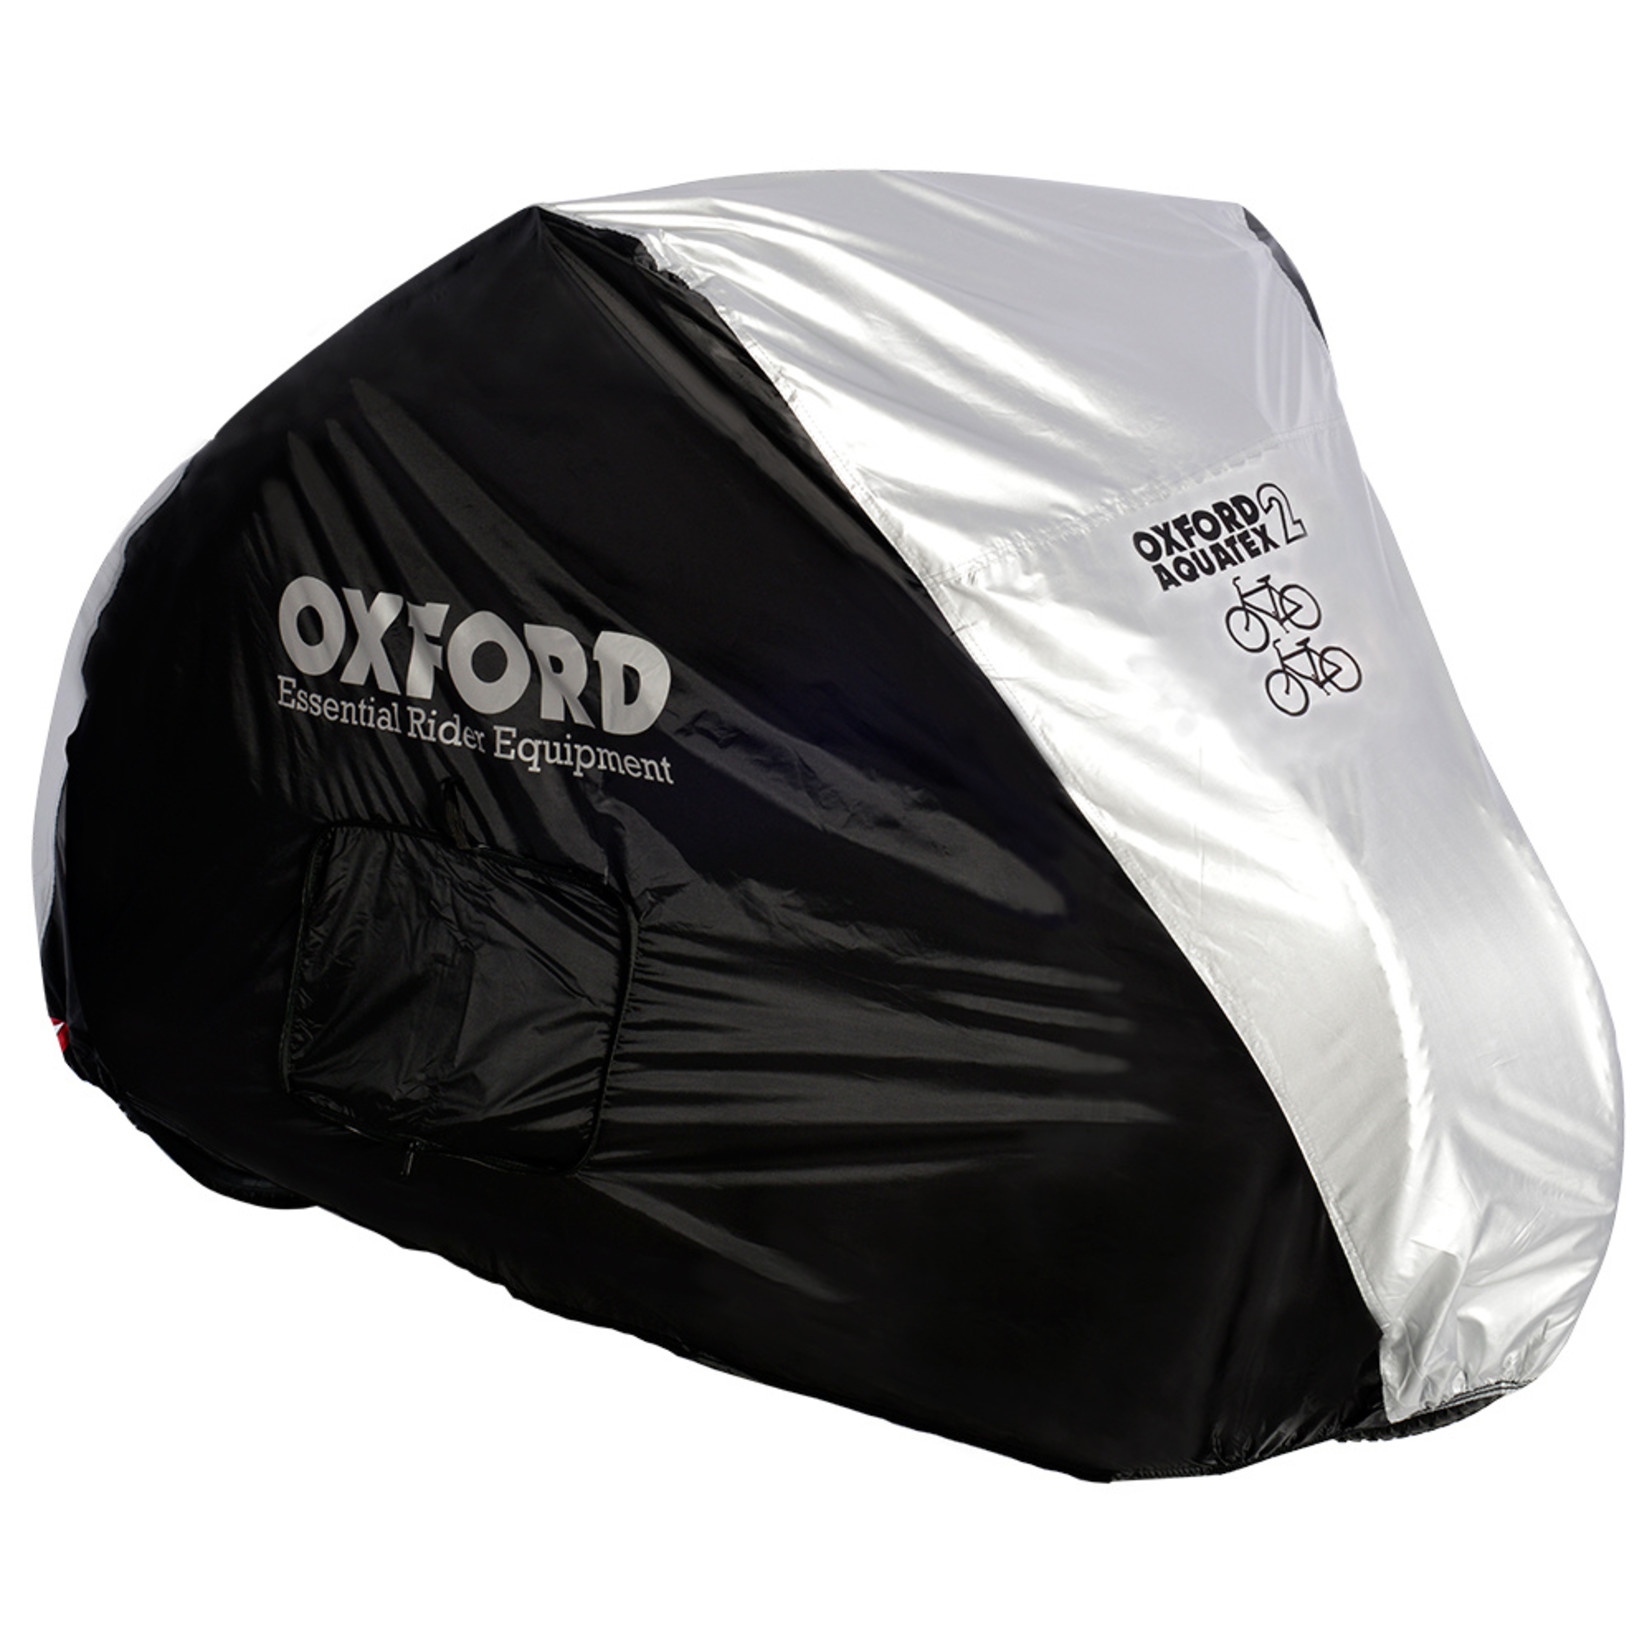 Oxford Oxford Aquatex Triple Bicycle Cover